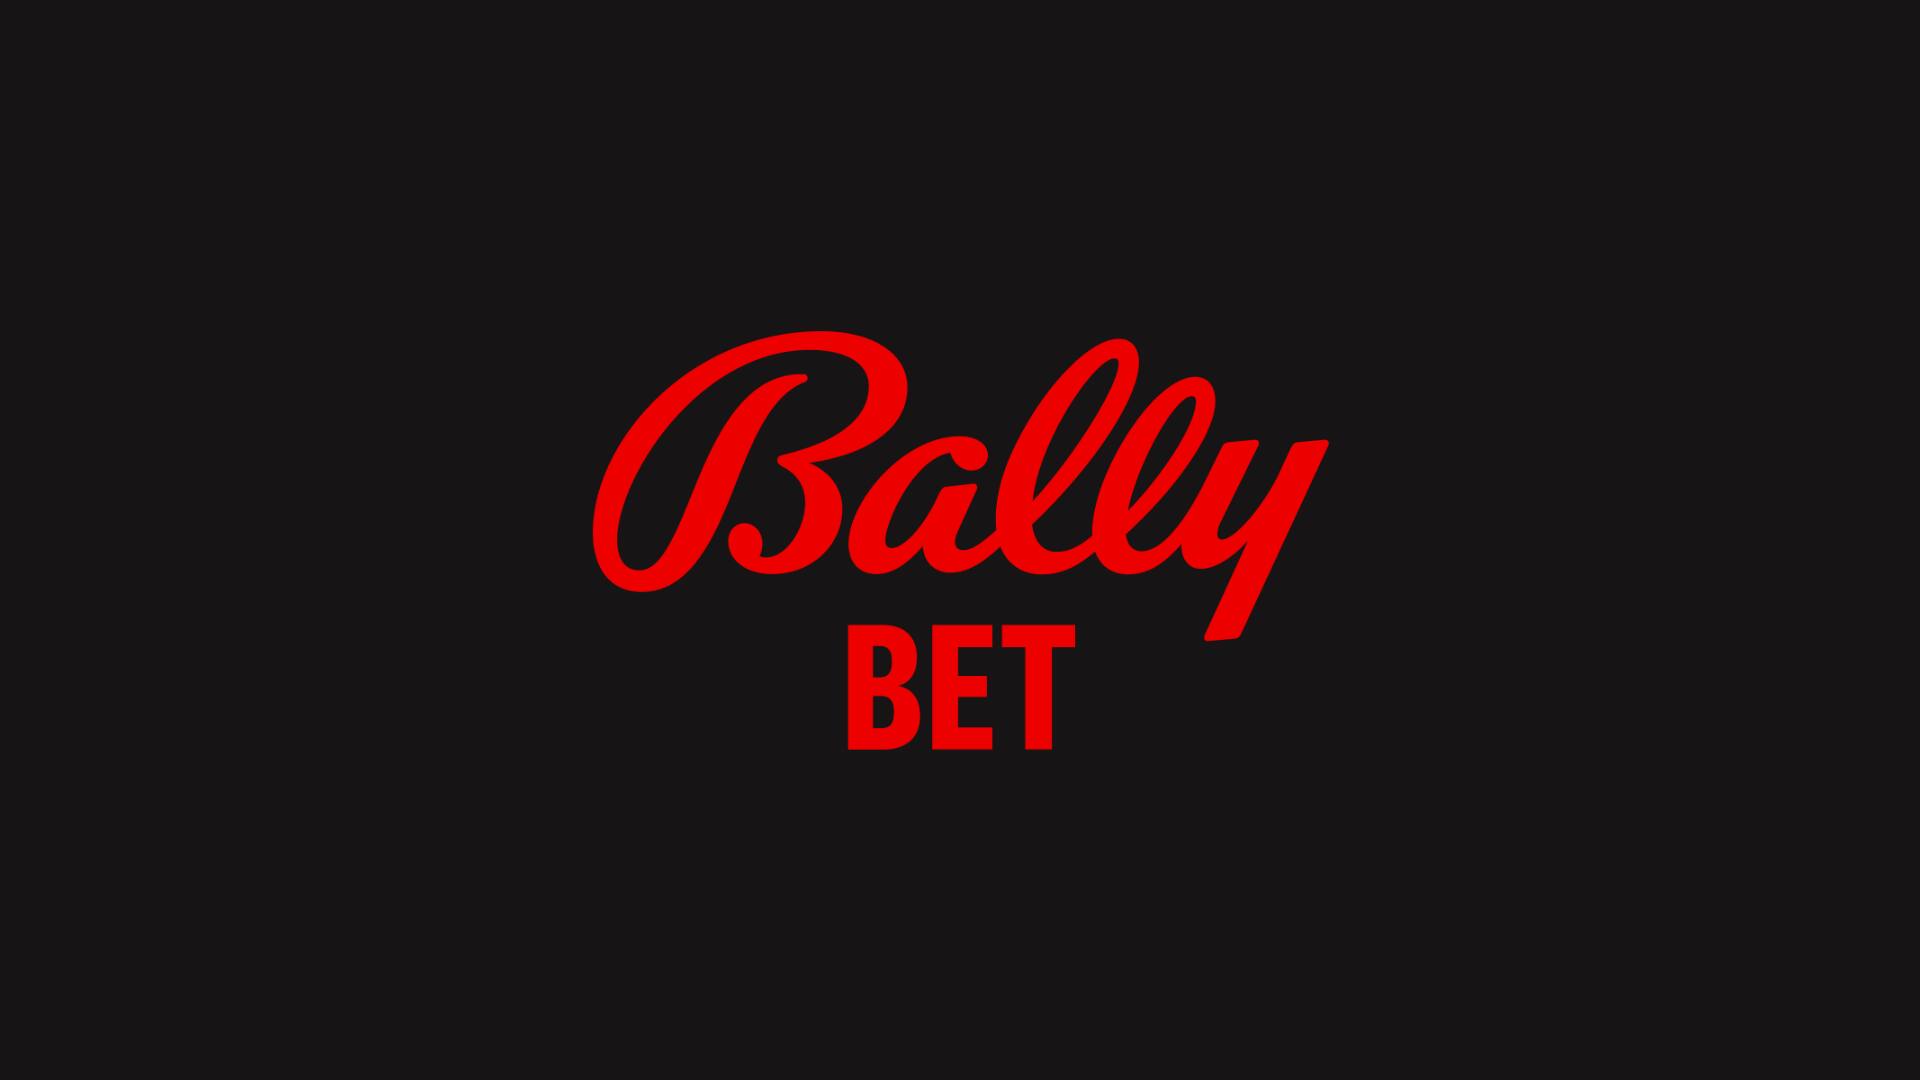 bally casino